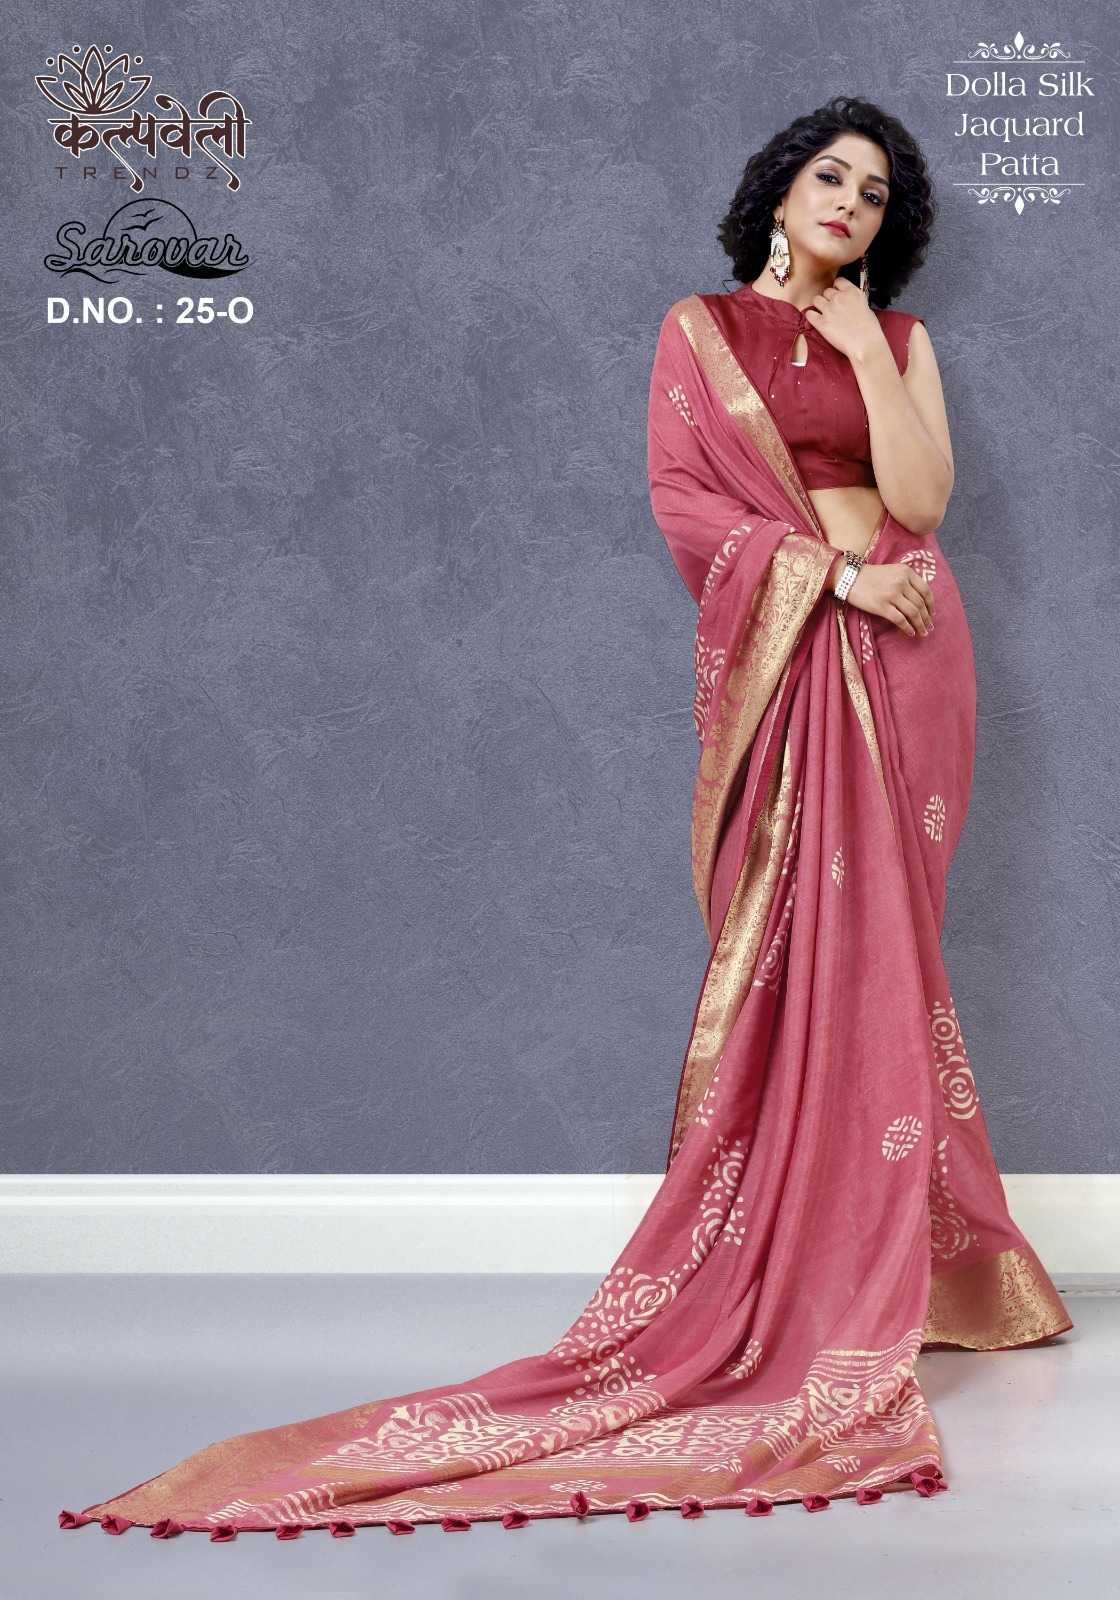 kalpavelly trendz sarovar 25 batik print jacquard border dola silk sarees supplier